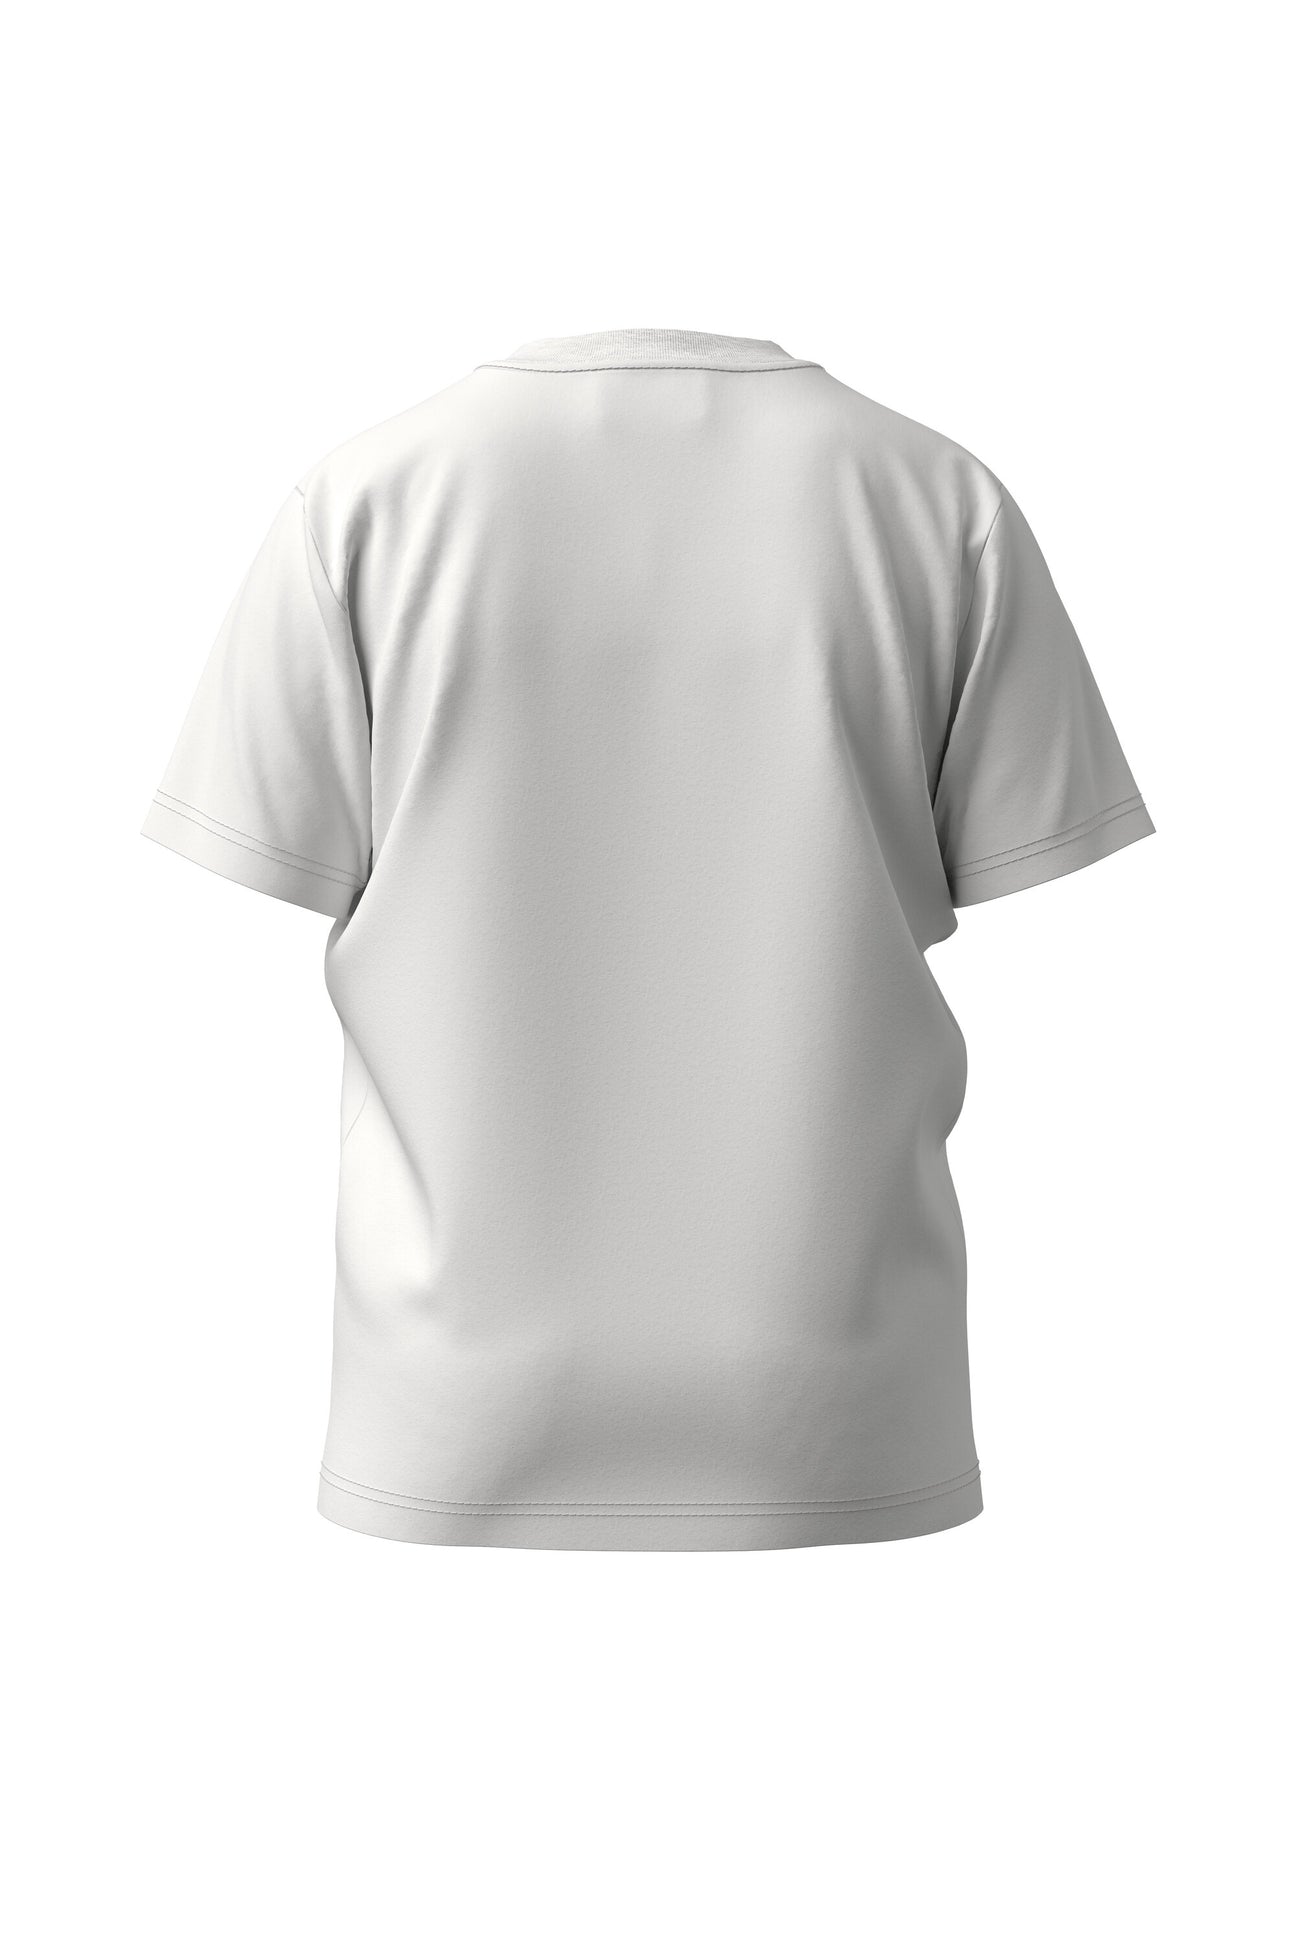 White jersey undershirt with logo White jersey undershirt with logo